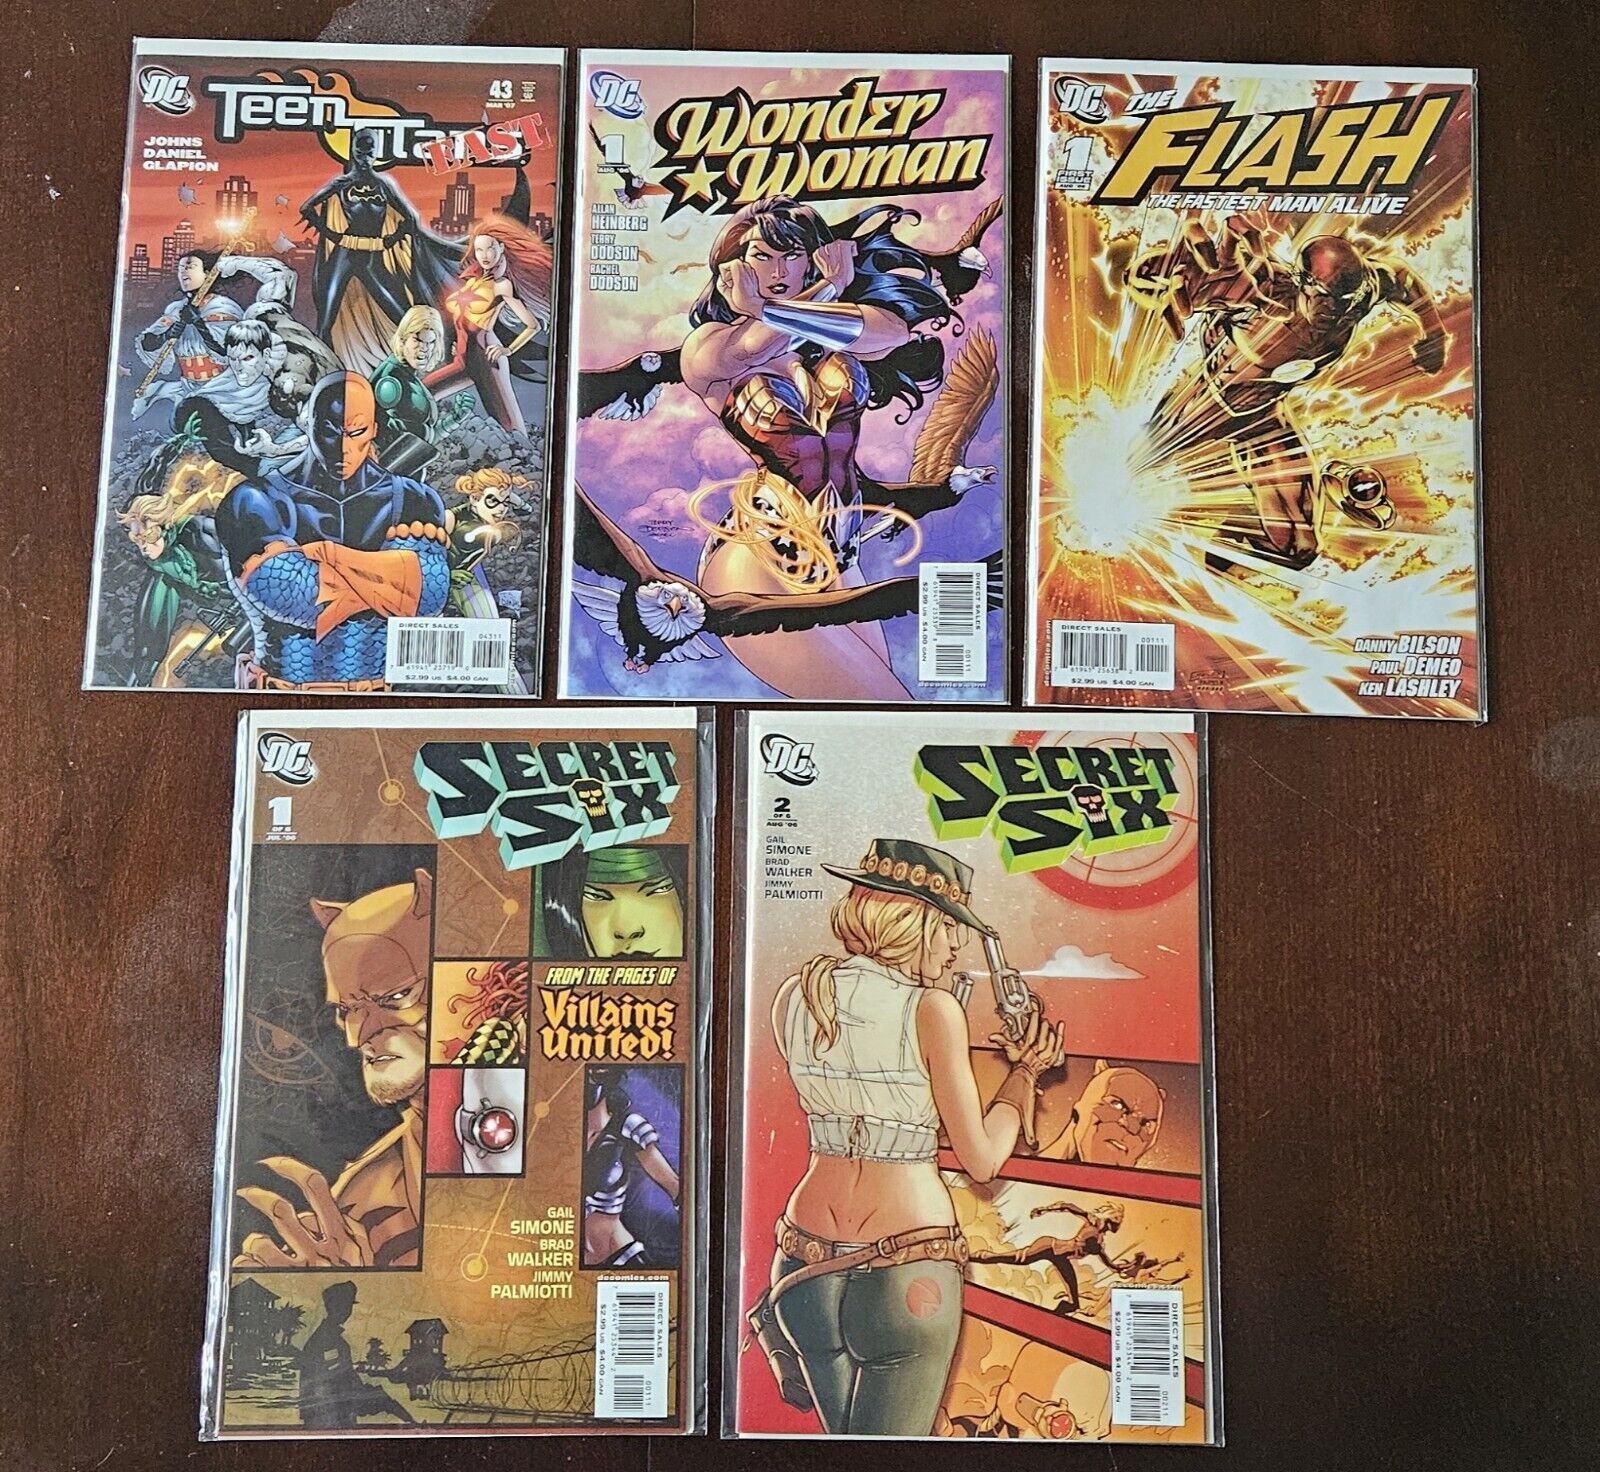 Teen Titans #43  1st App of Enigma, Flash #1, Wonder Woman #1, Secret Six #1-2